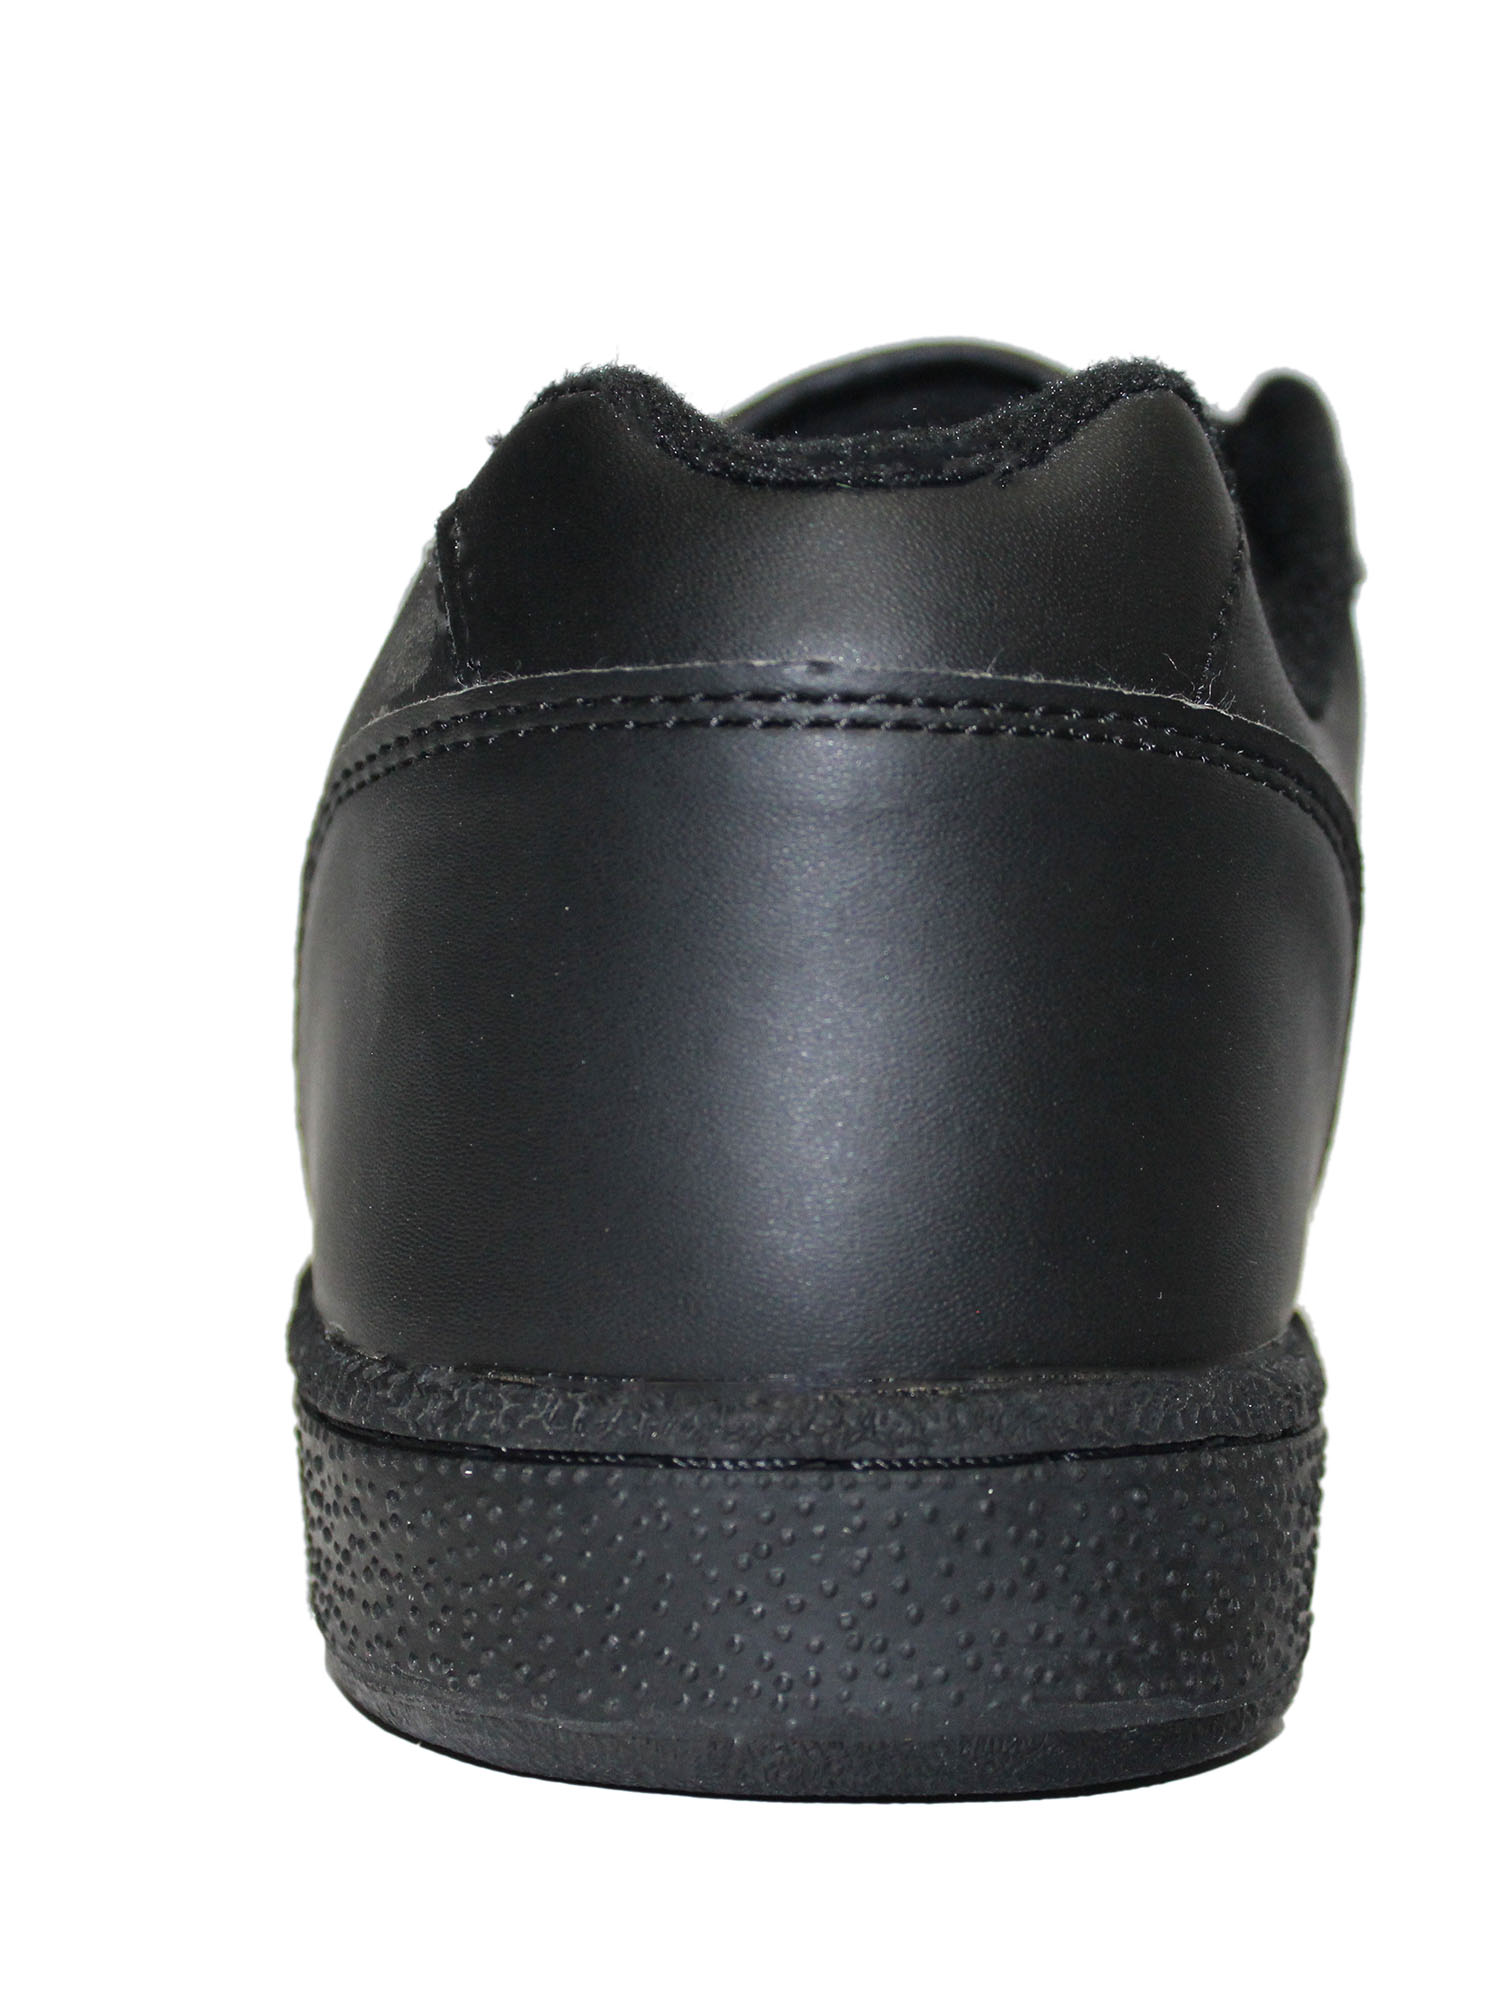 Tanleewa Men's Leather Strap Sneakers Lightweight Hook and Loop Walking Shoe Size 11 Adult Male - image 4 of 4